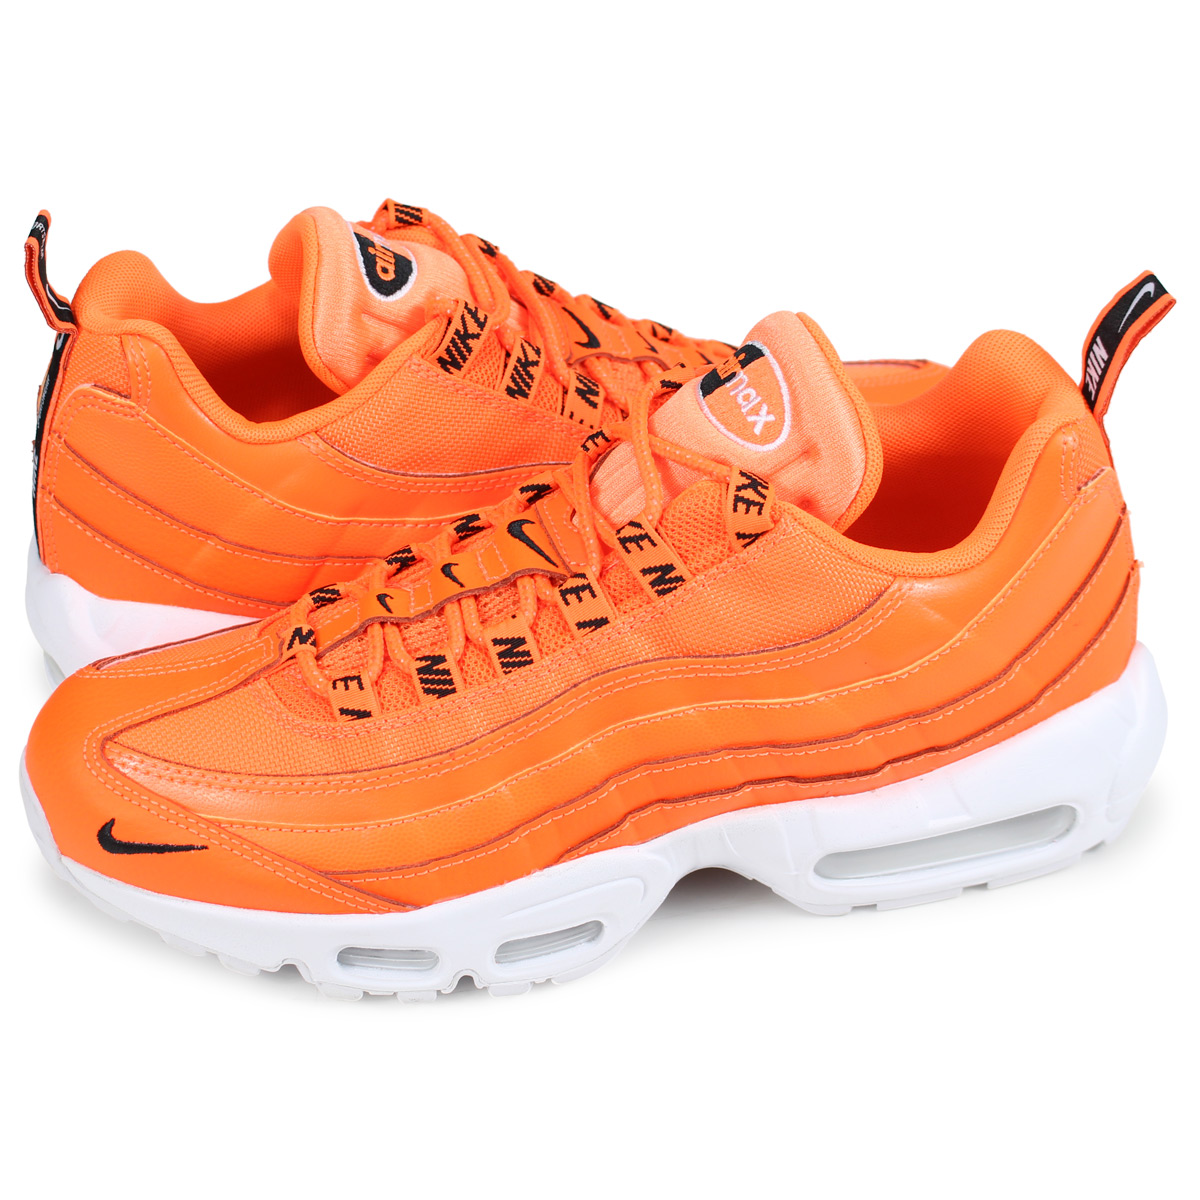 orange nike air shoes